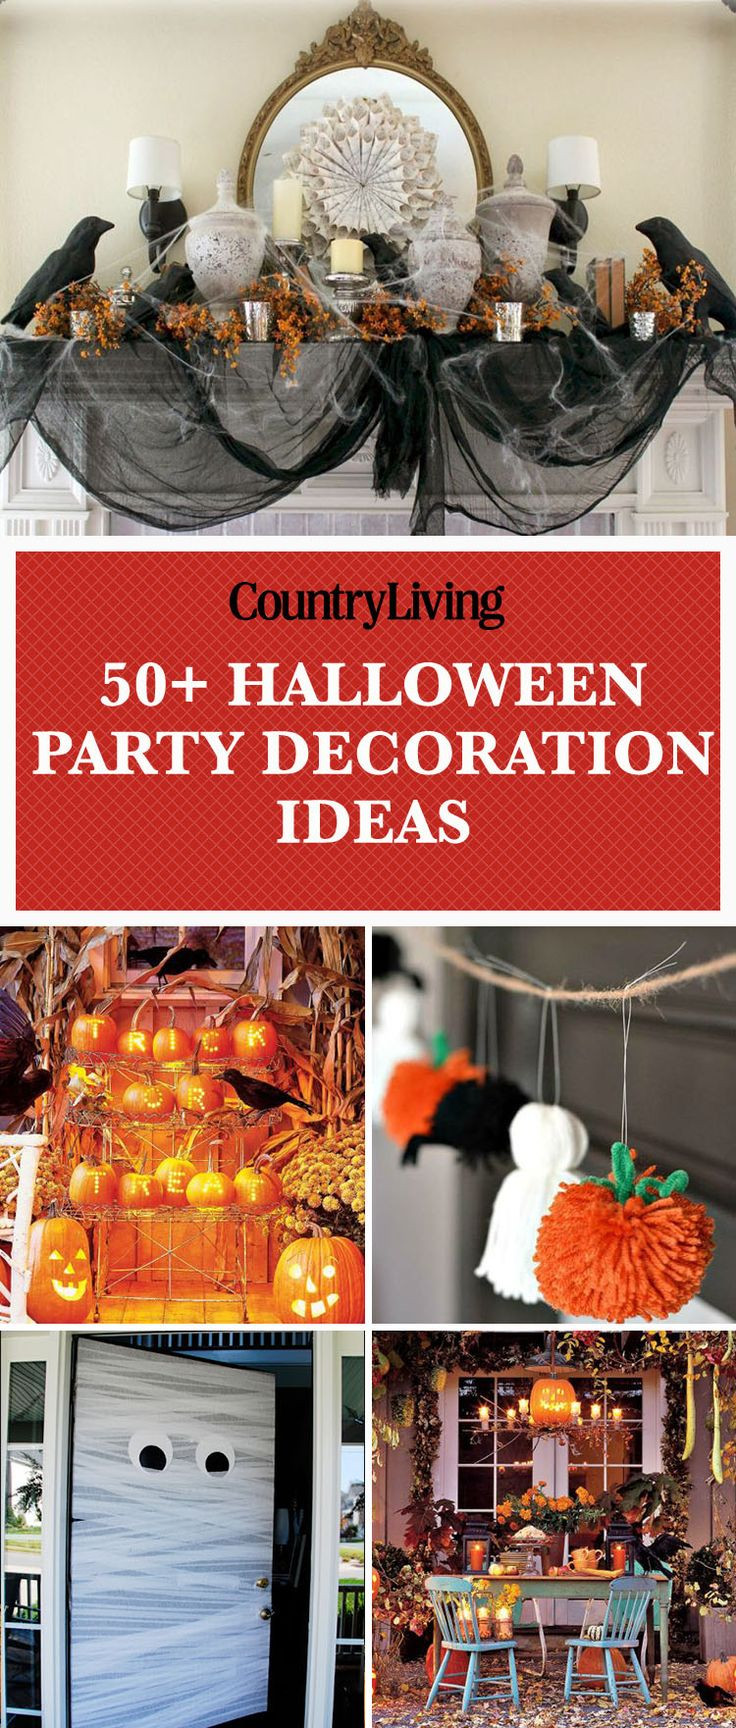 Children'S Halloween Party Decoration Ideas
 20 best Super Simple Halloween Ideas images on Pinterest